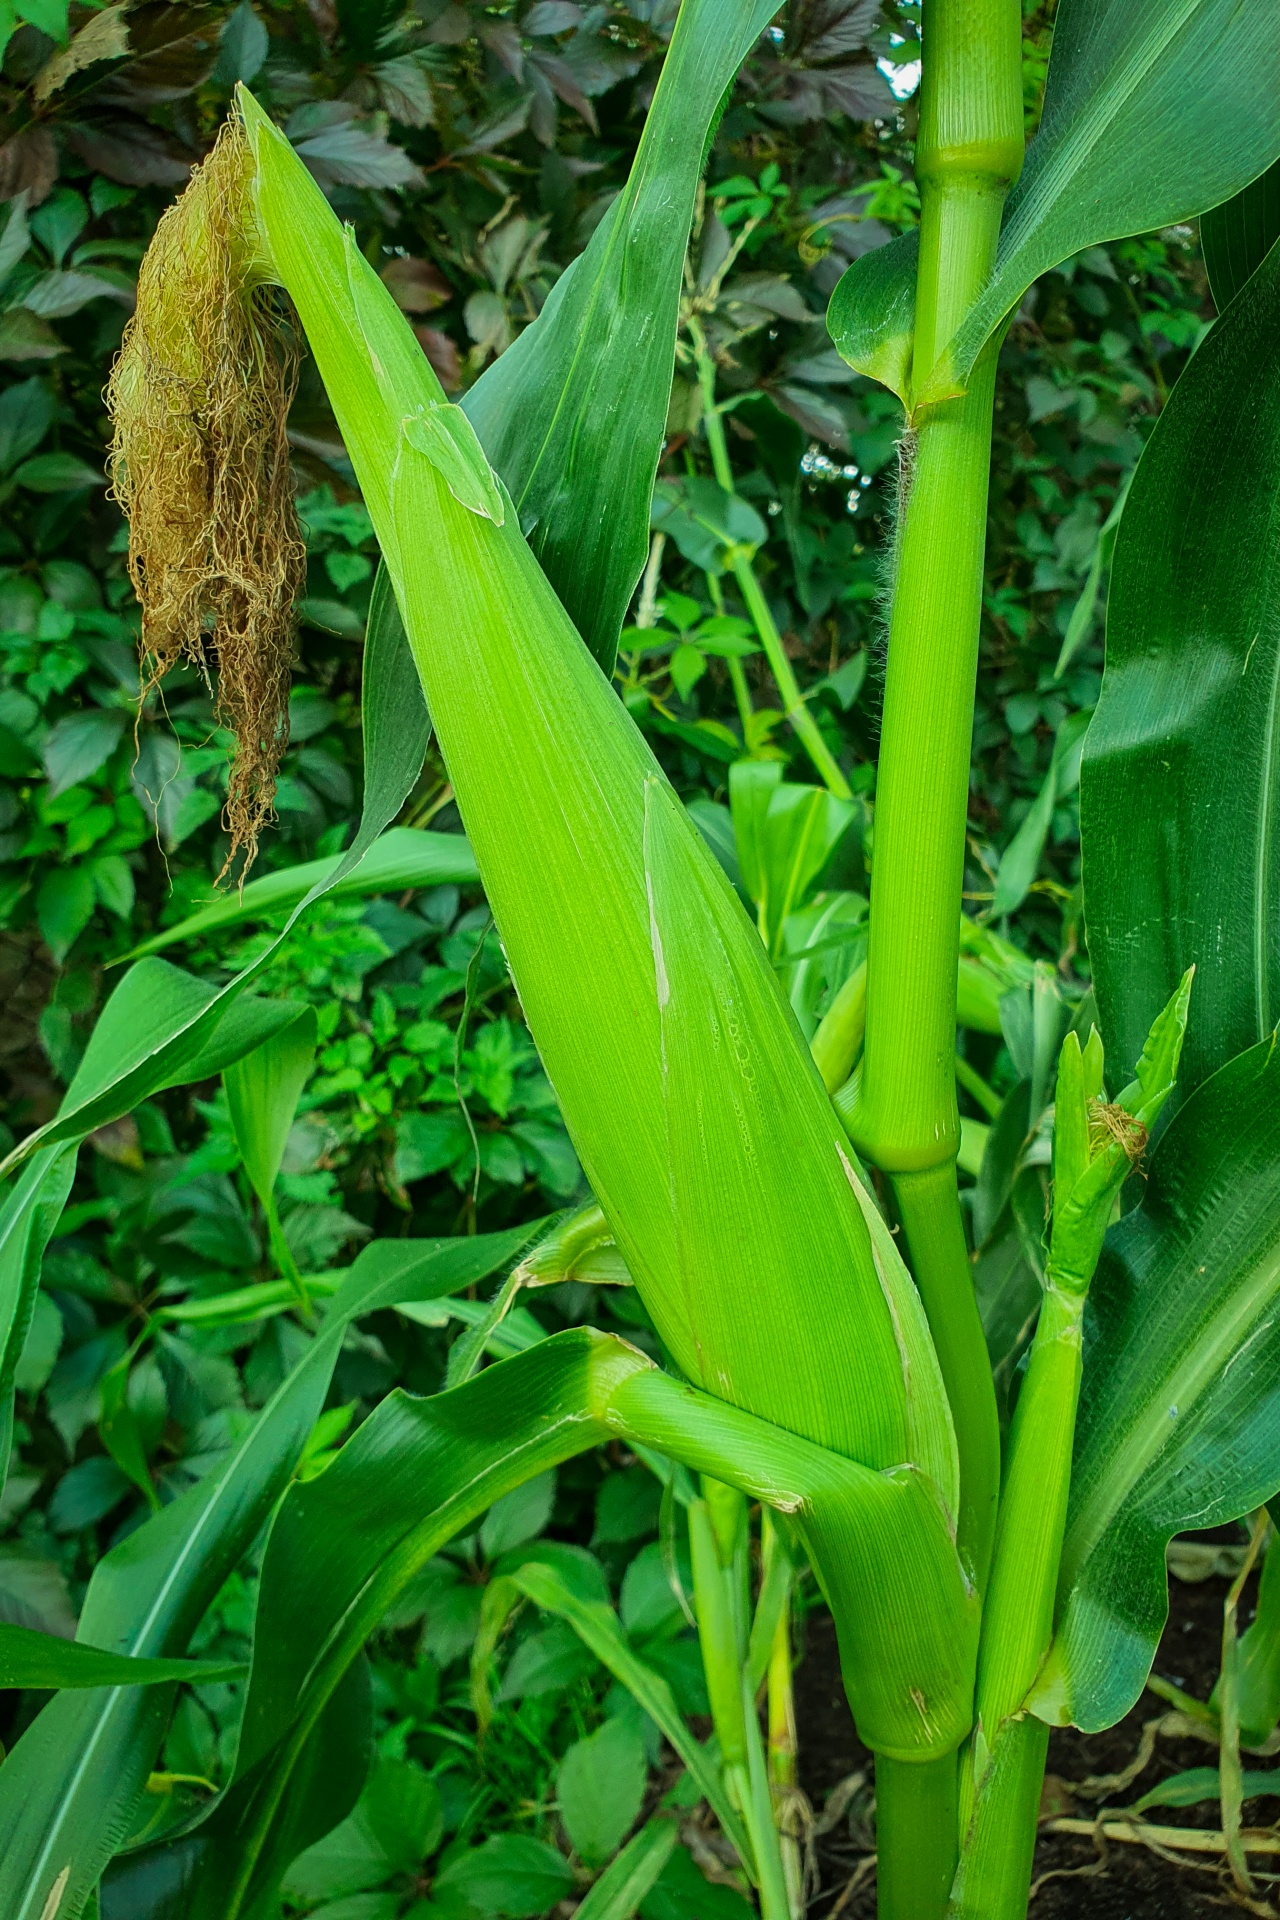 Green corn cob growing